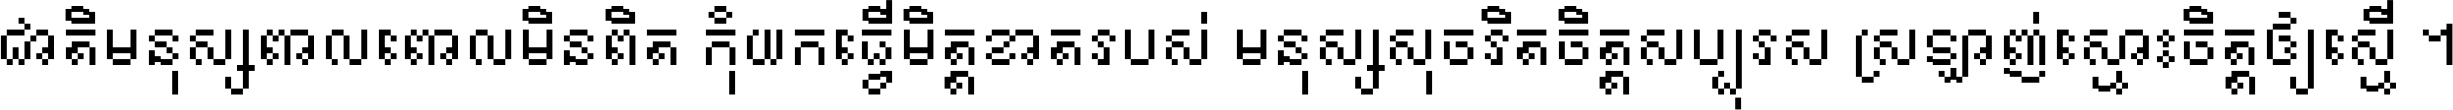 Kh Pixel Retro 8-bit Text